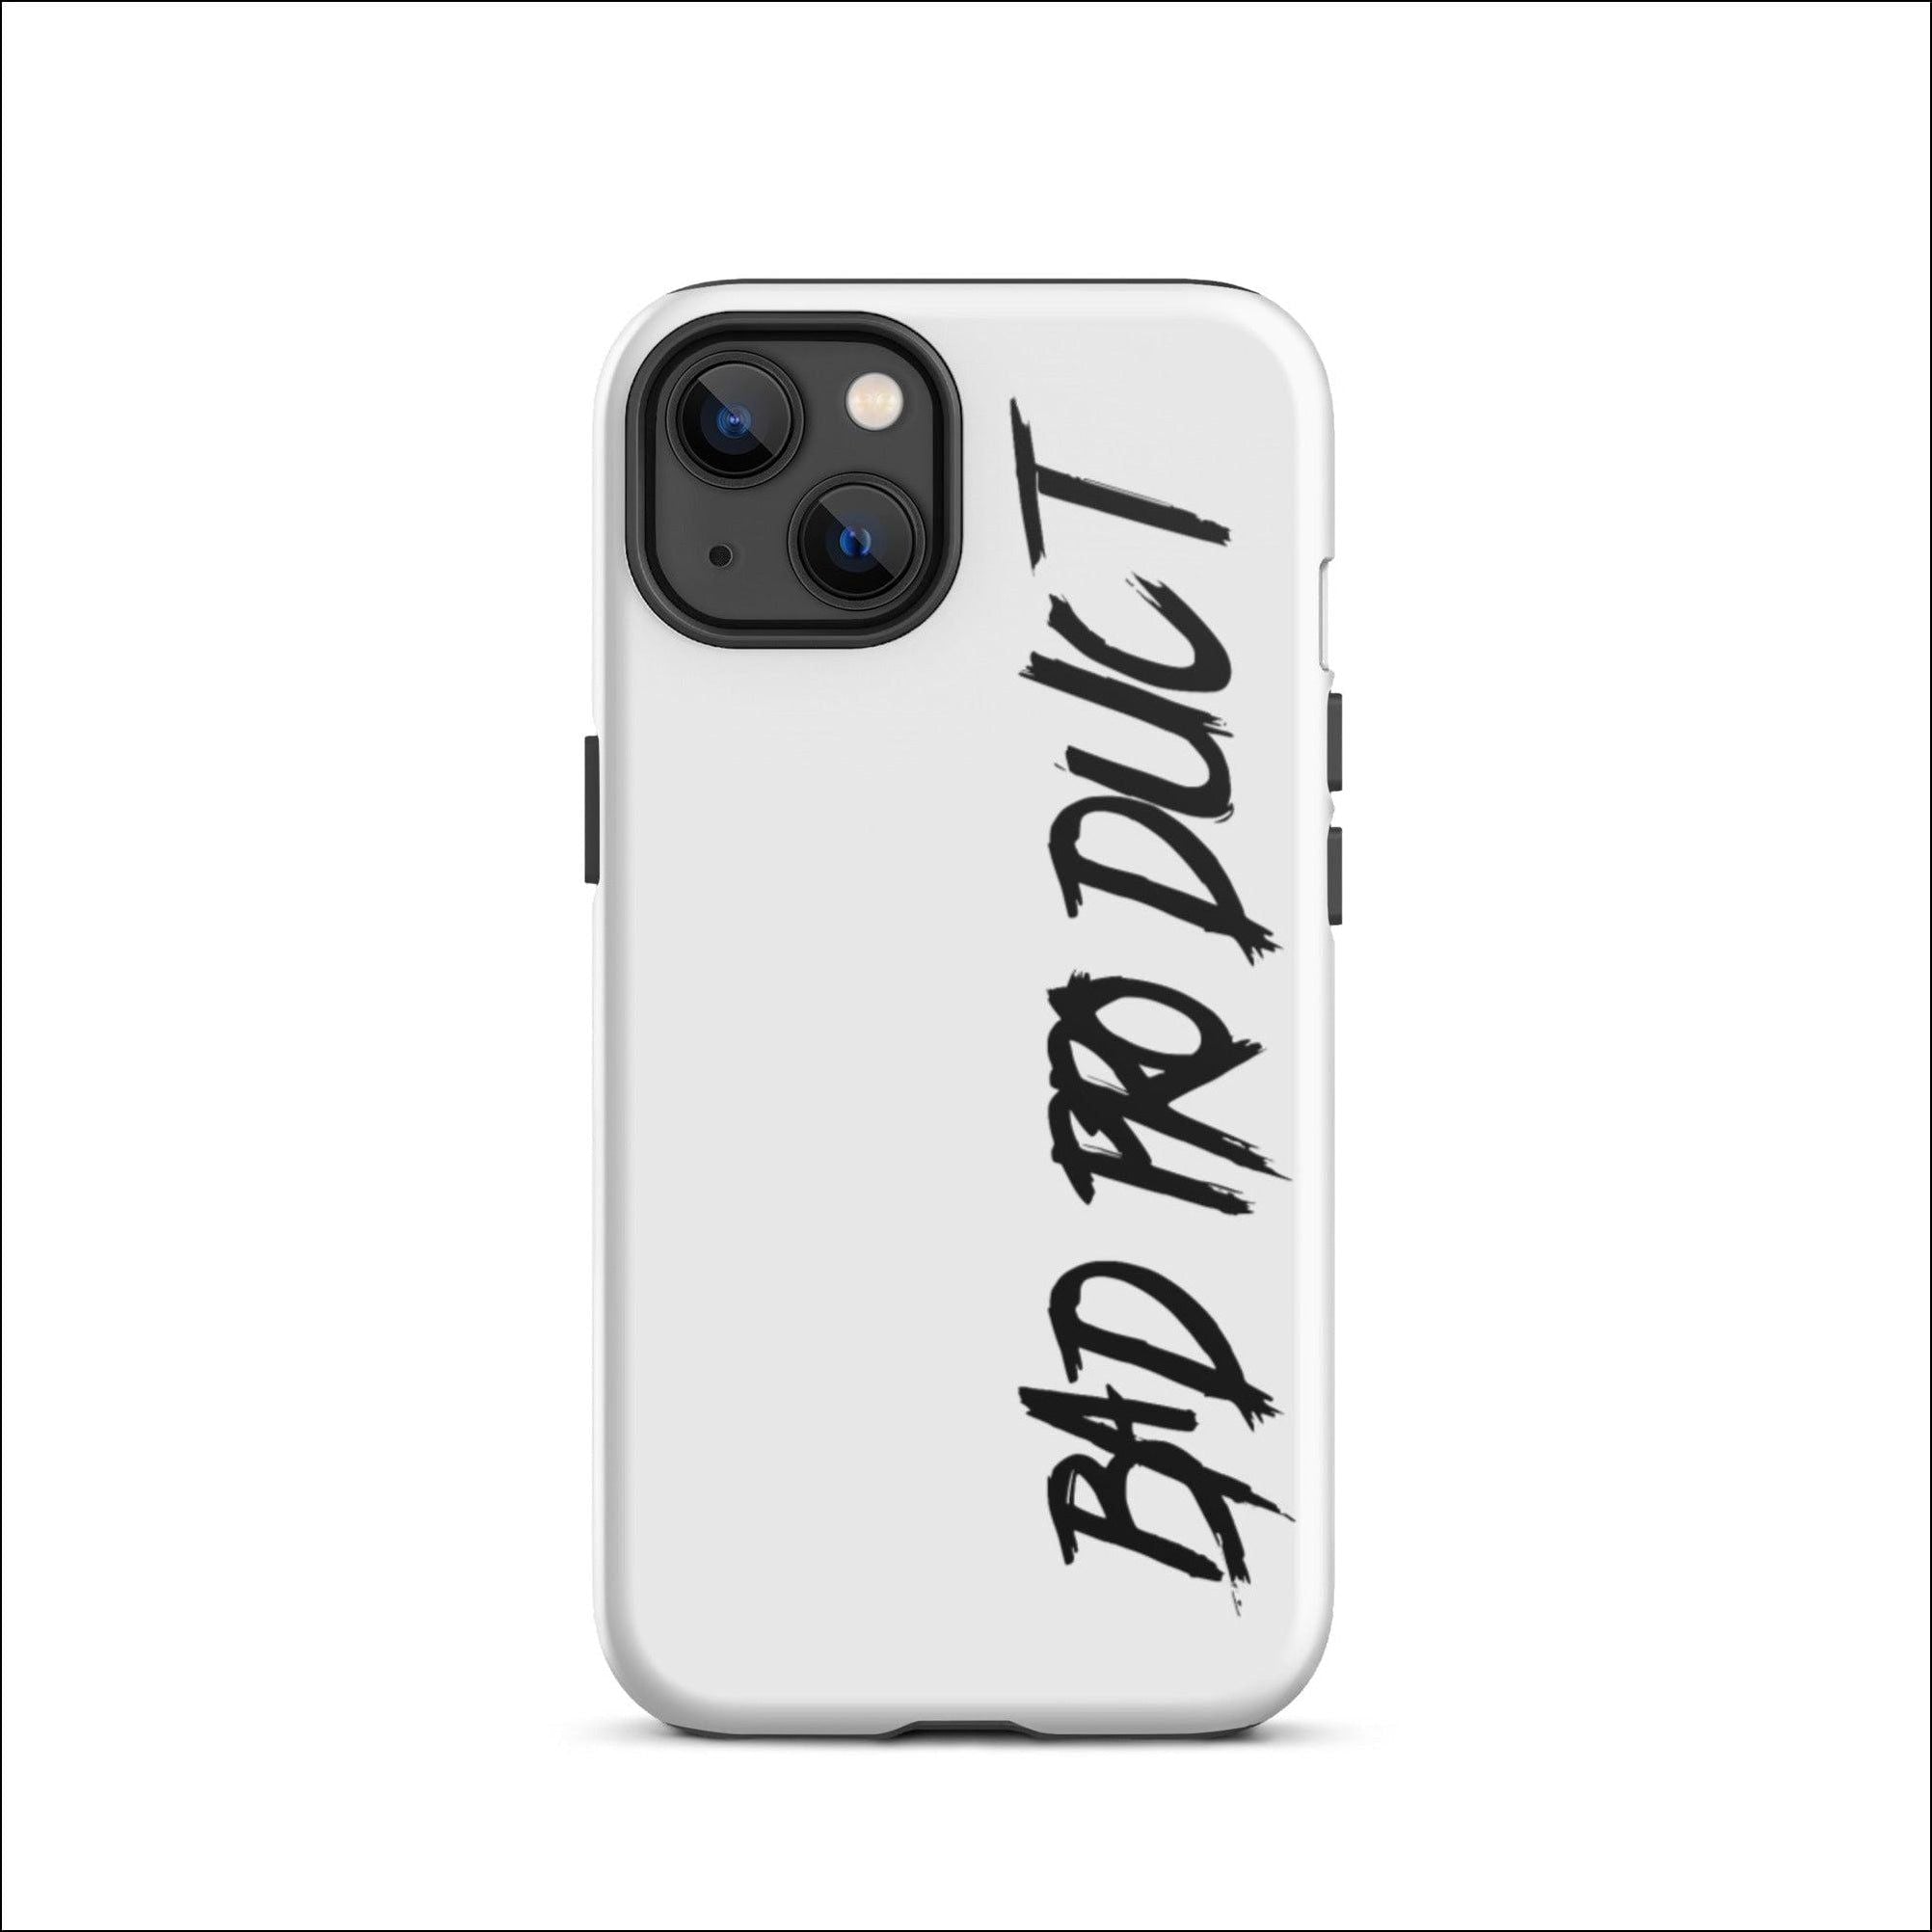 Bp Tough Iphone Case - Bad Product